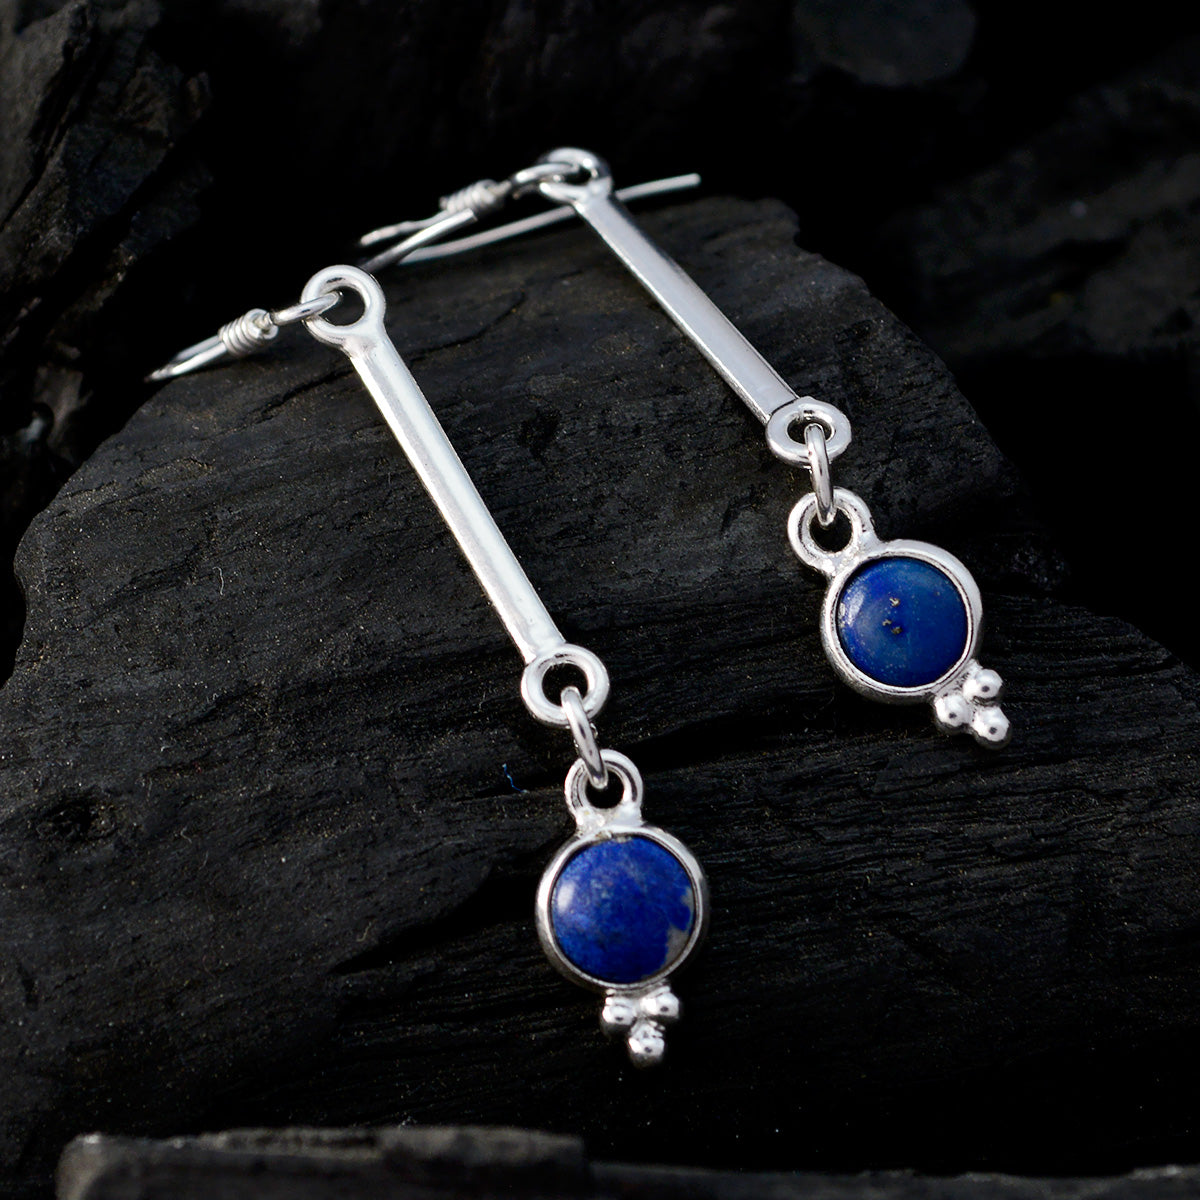 Riyo Real Gemstones oval Cabochon Nevy Blue Lapis Lazuli Silver Earrings gift for halloween